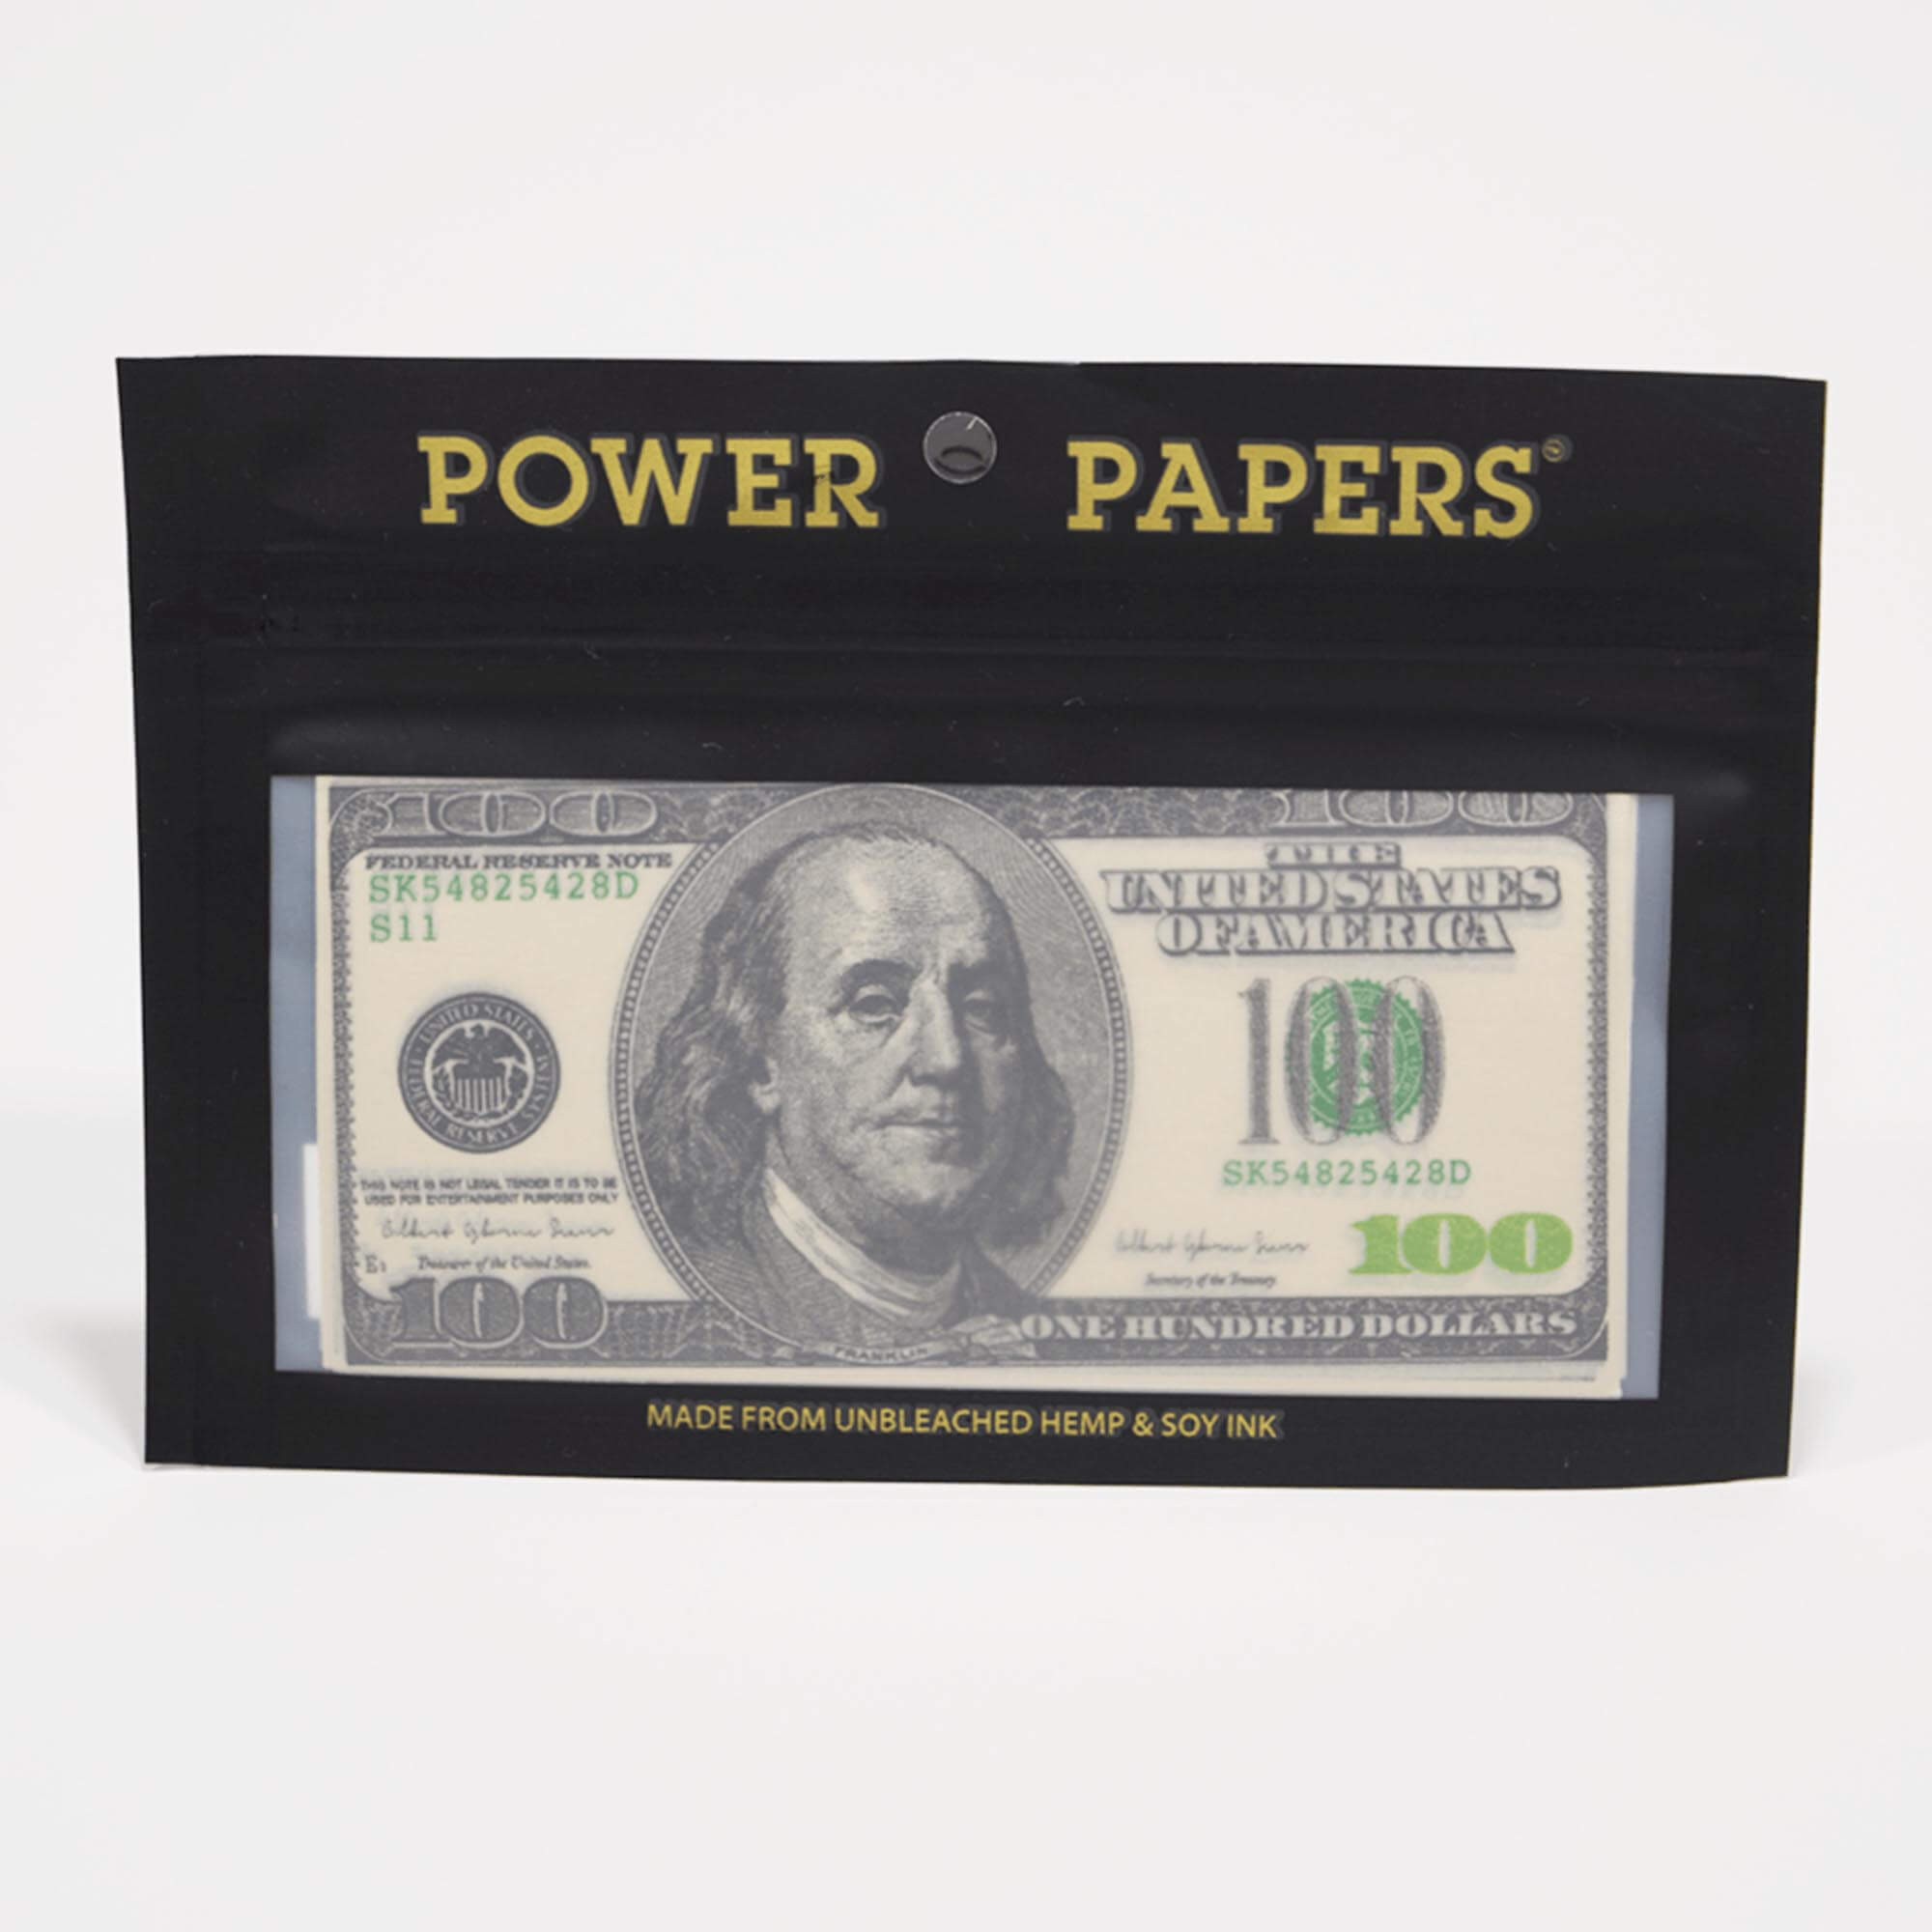 Power Papers $100 King Size Slim Longpapers - Smokerhontas